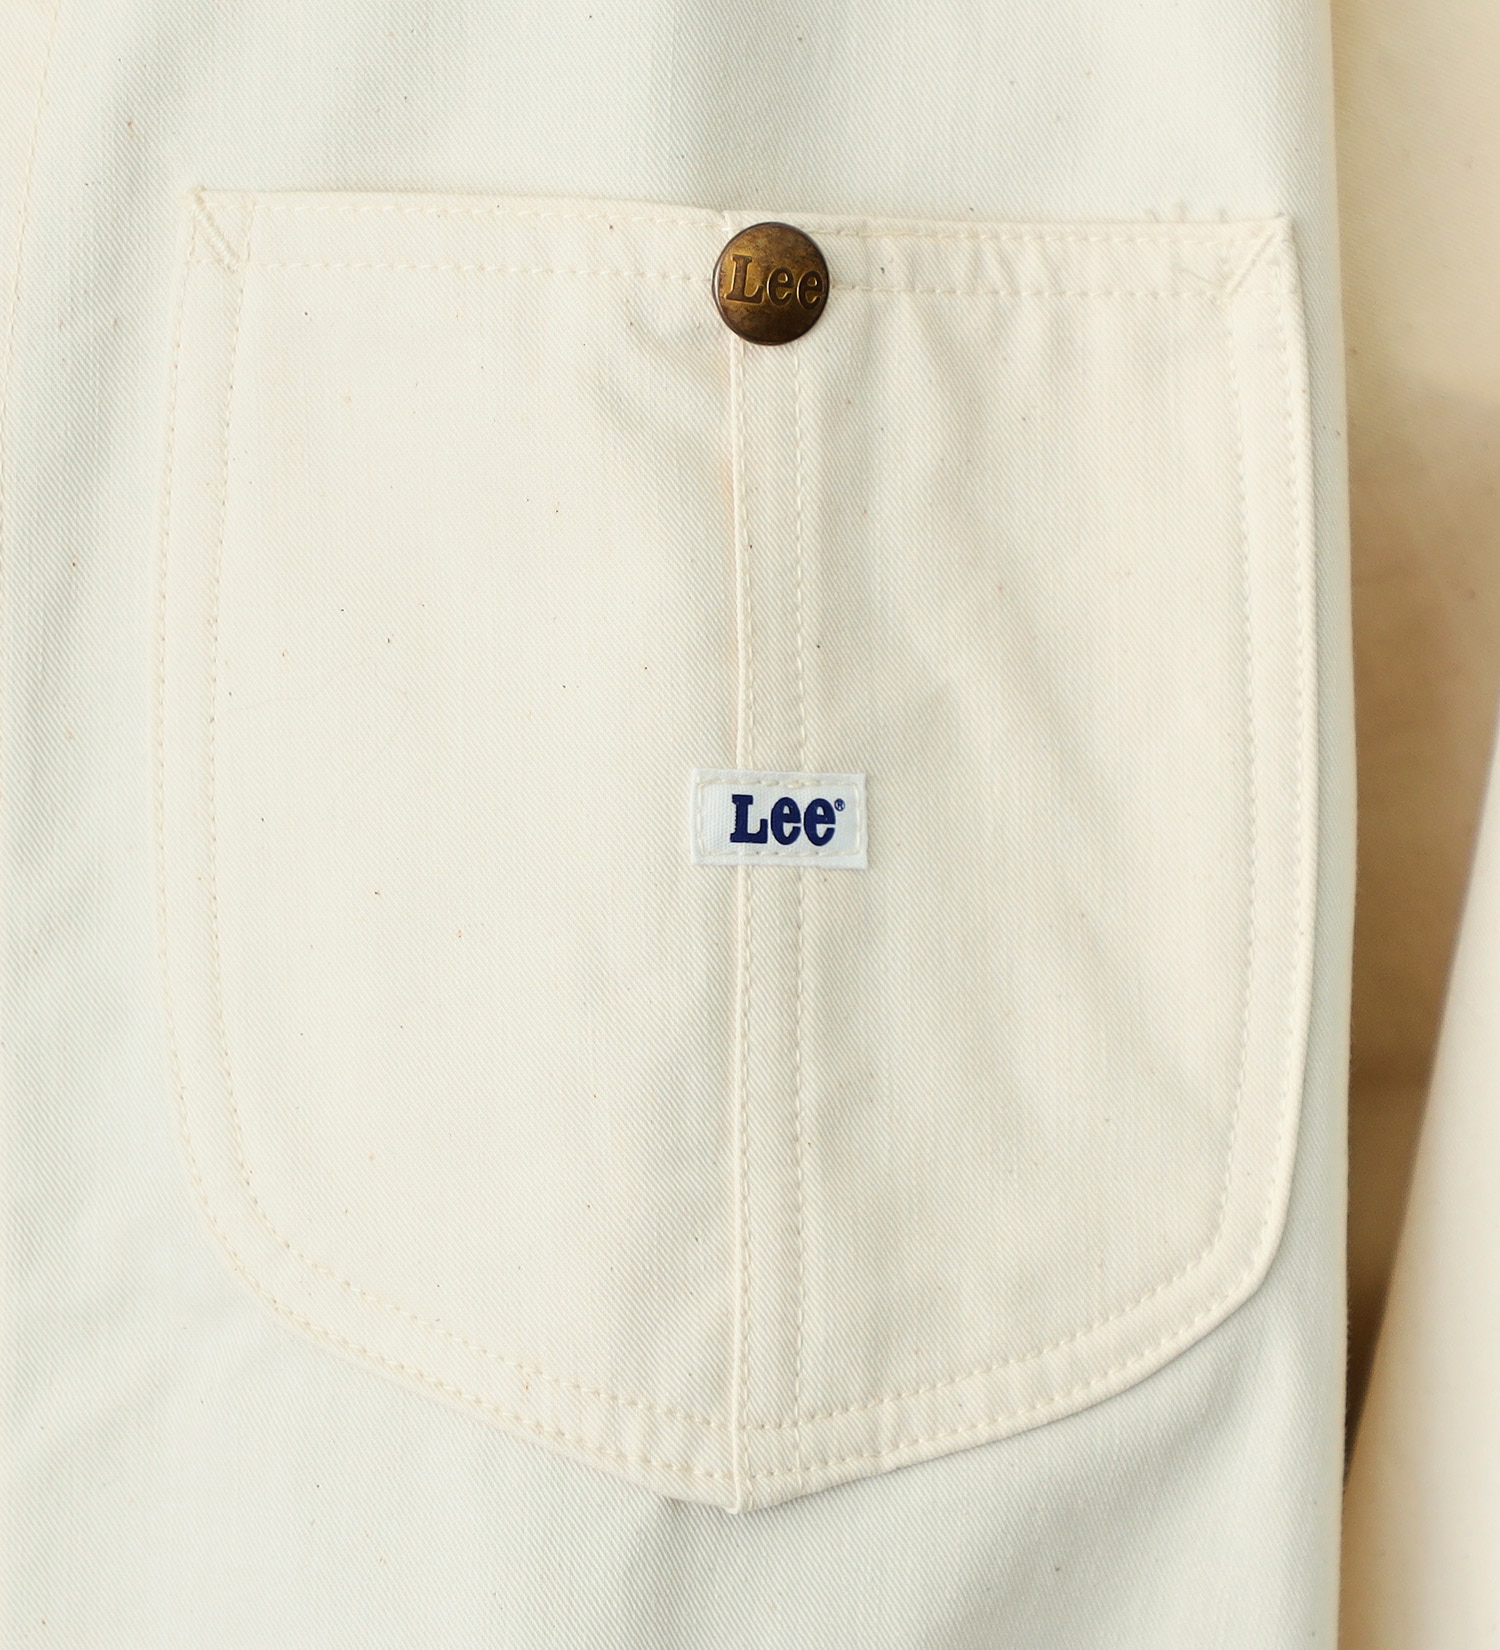 Lee(リー)のSUPERSIZED カバーオールジャケット|ジャケット/アウター/カバーオール/メンズ|アイボリー